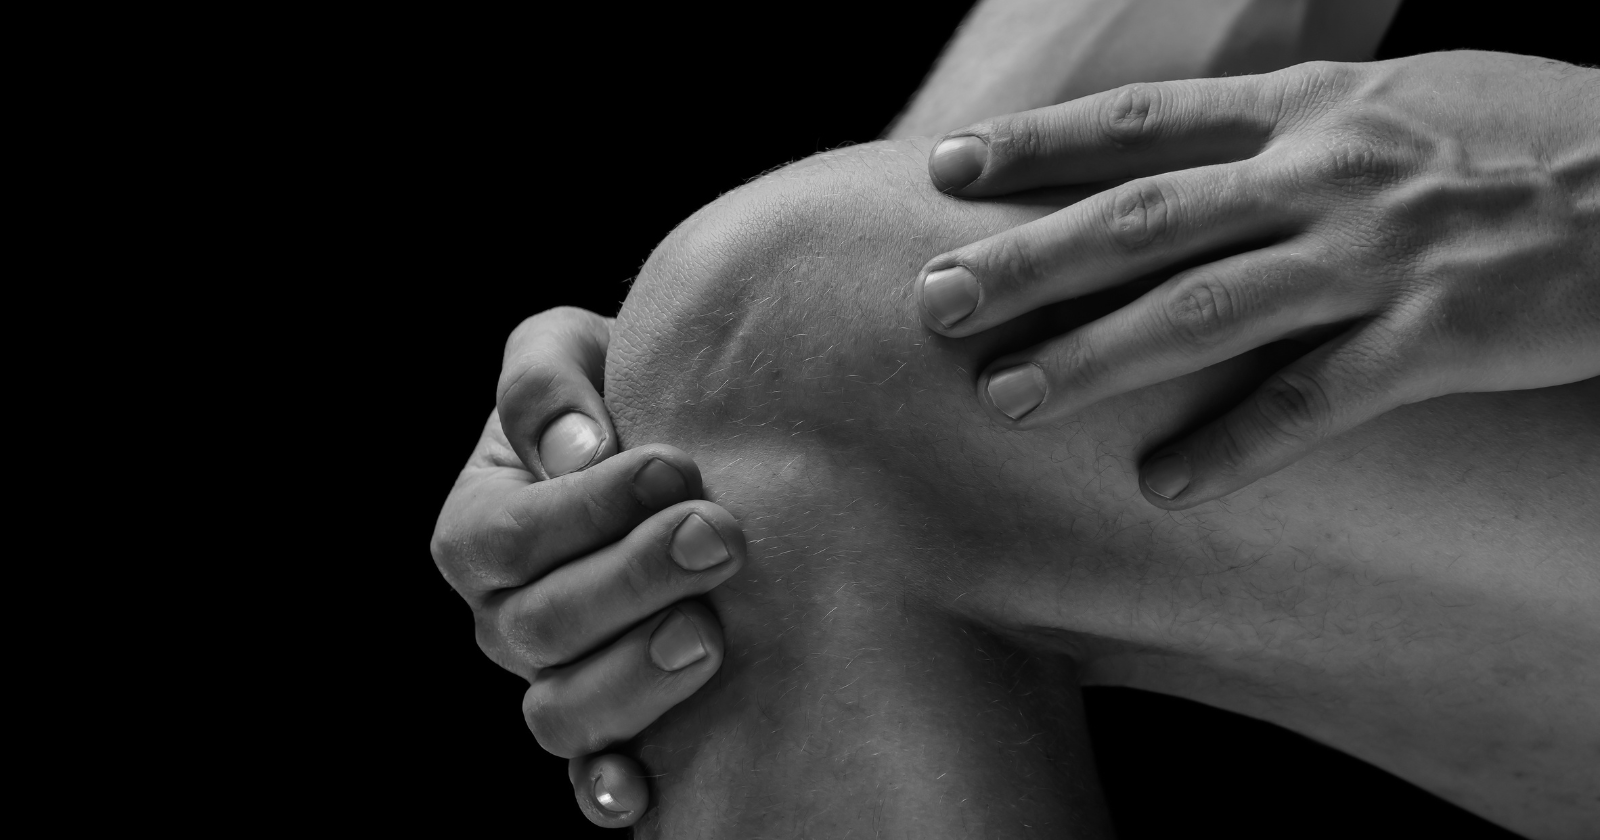 Knee Brace For Arthritis And Meniscus Tear